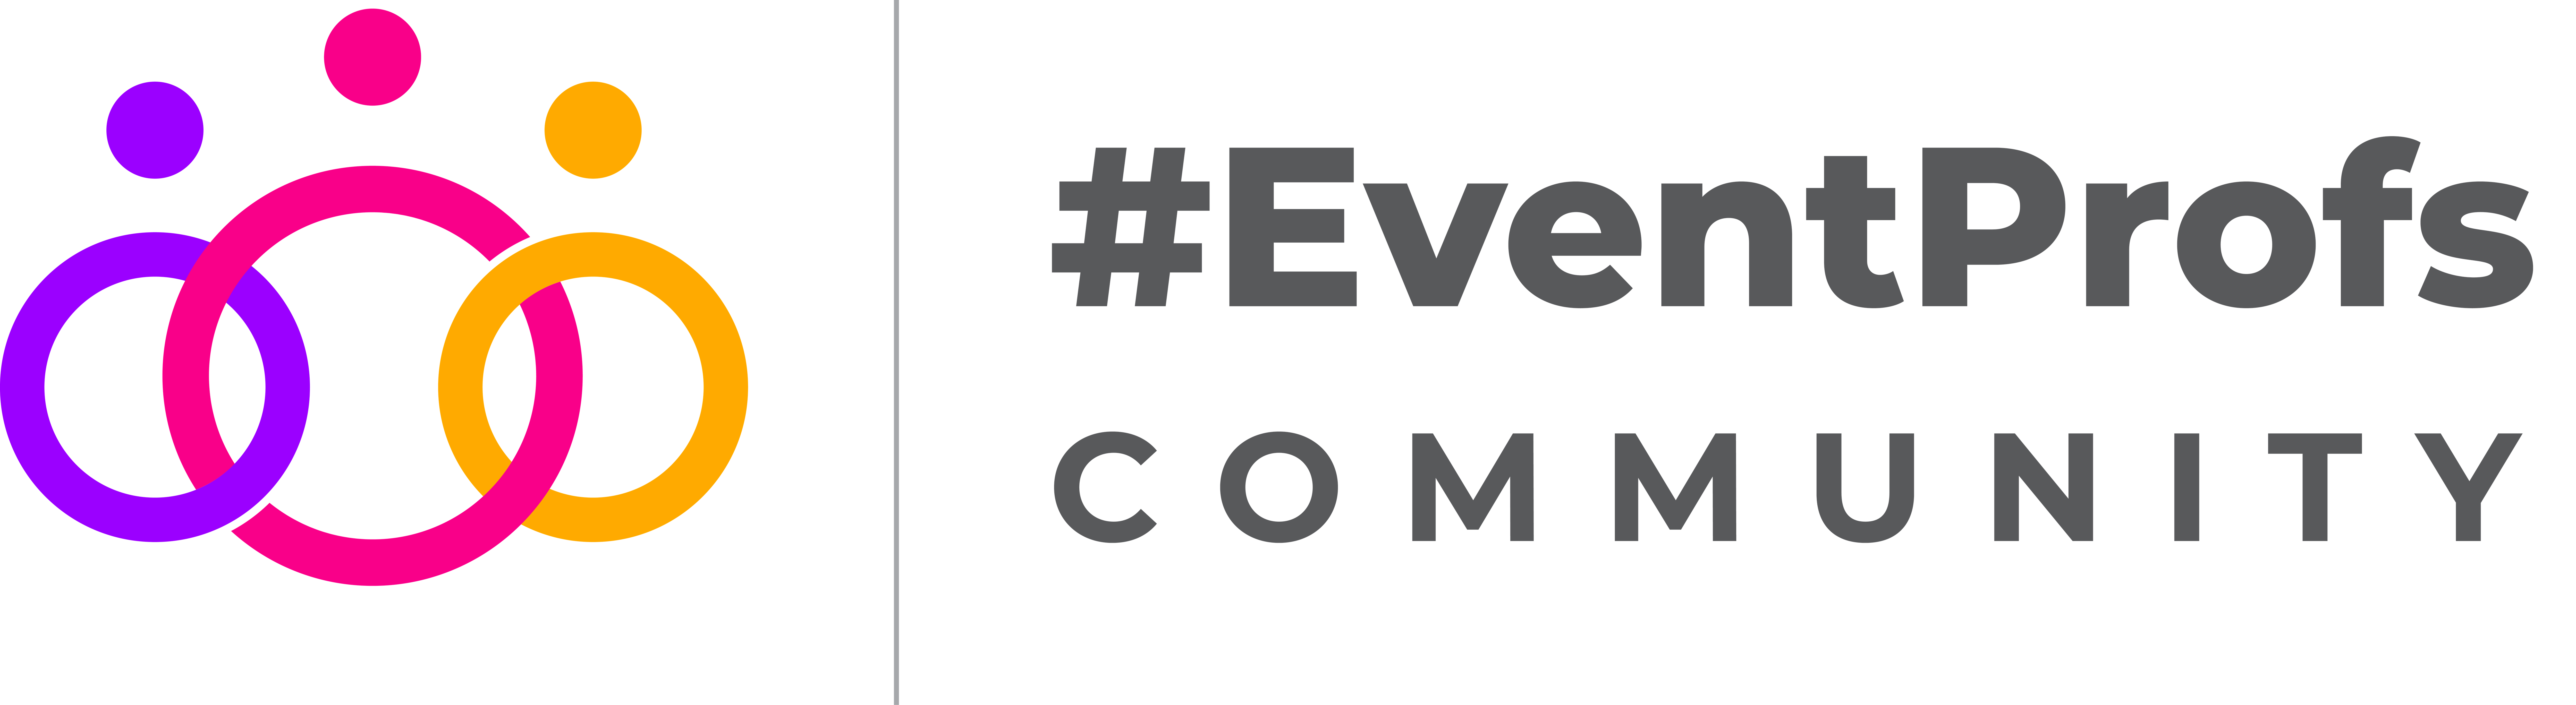 #EventProfs logo